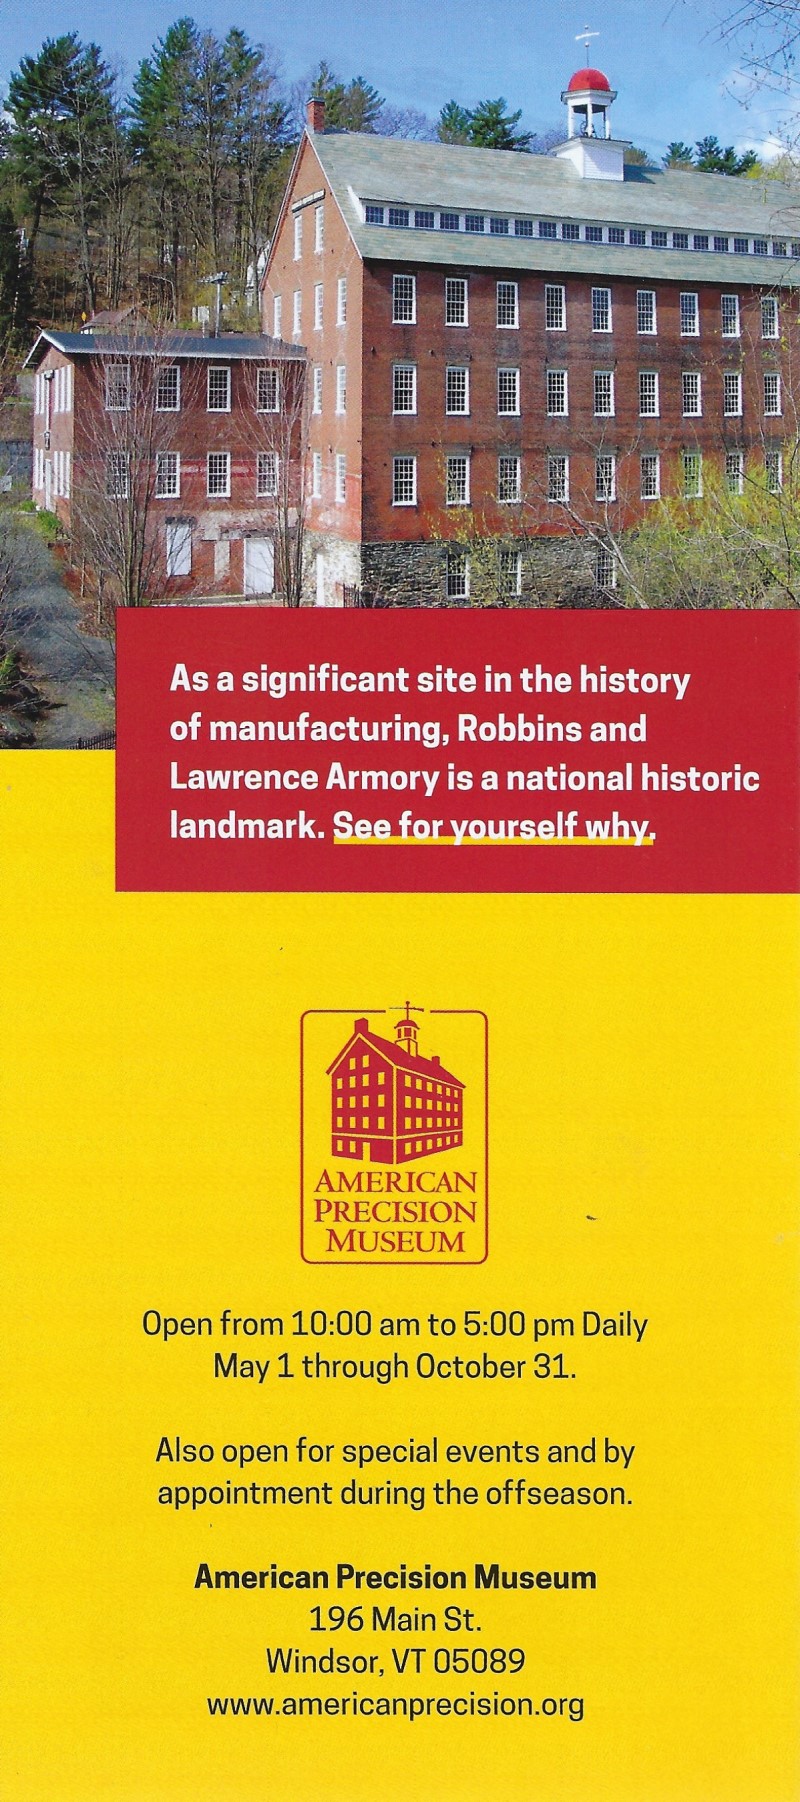 American Precision Museum brochure thumbnail